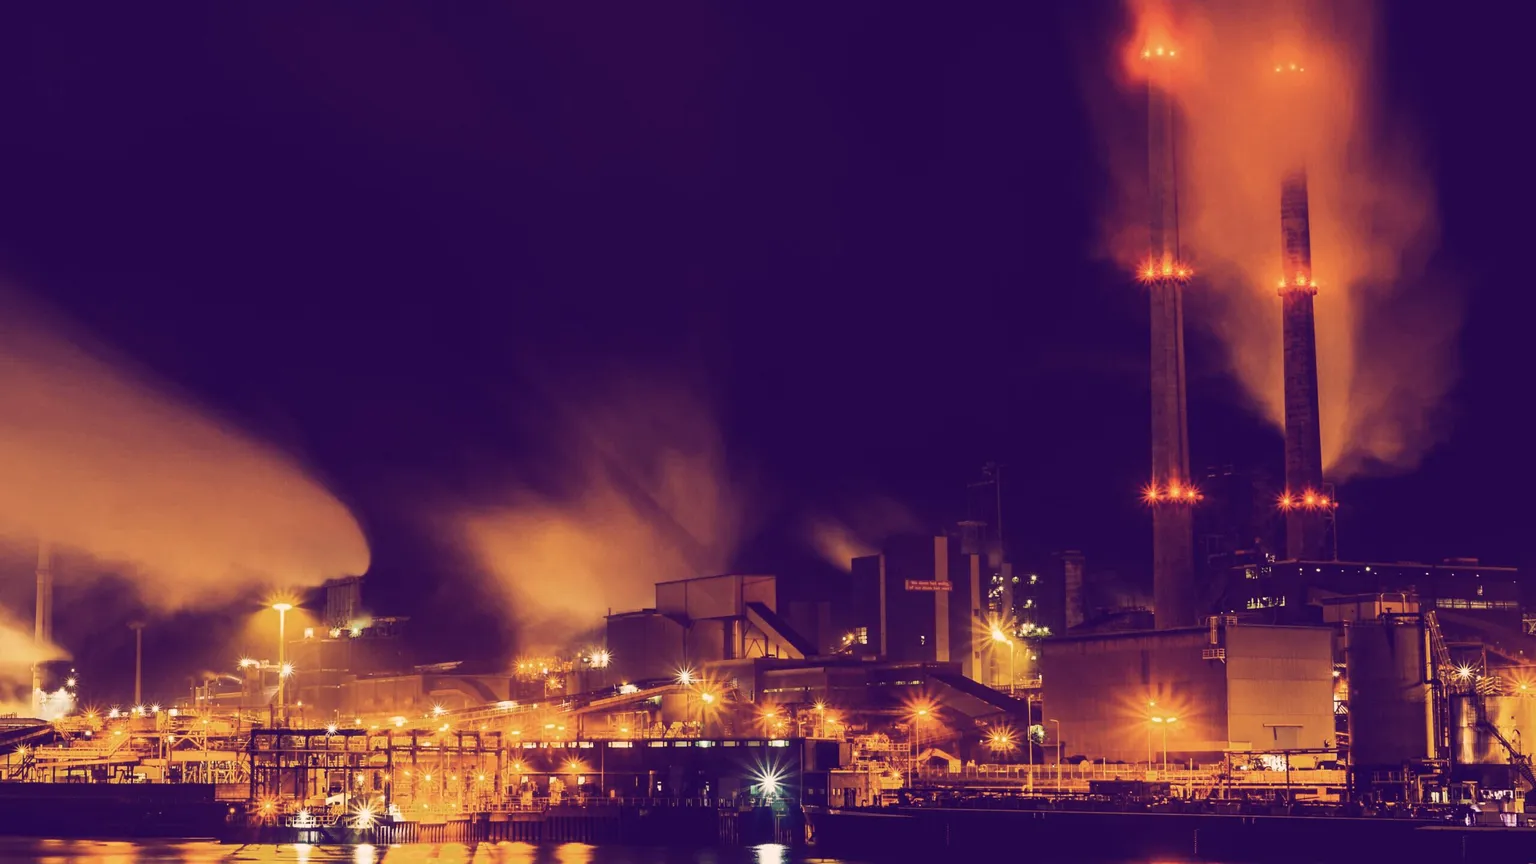 A power plant at night. Image: Unsplash